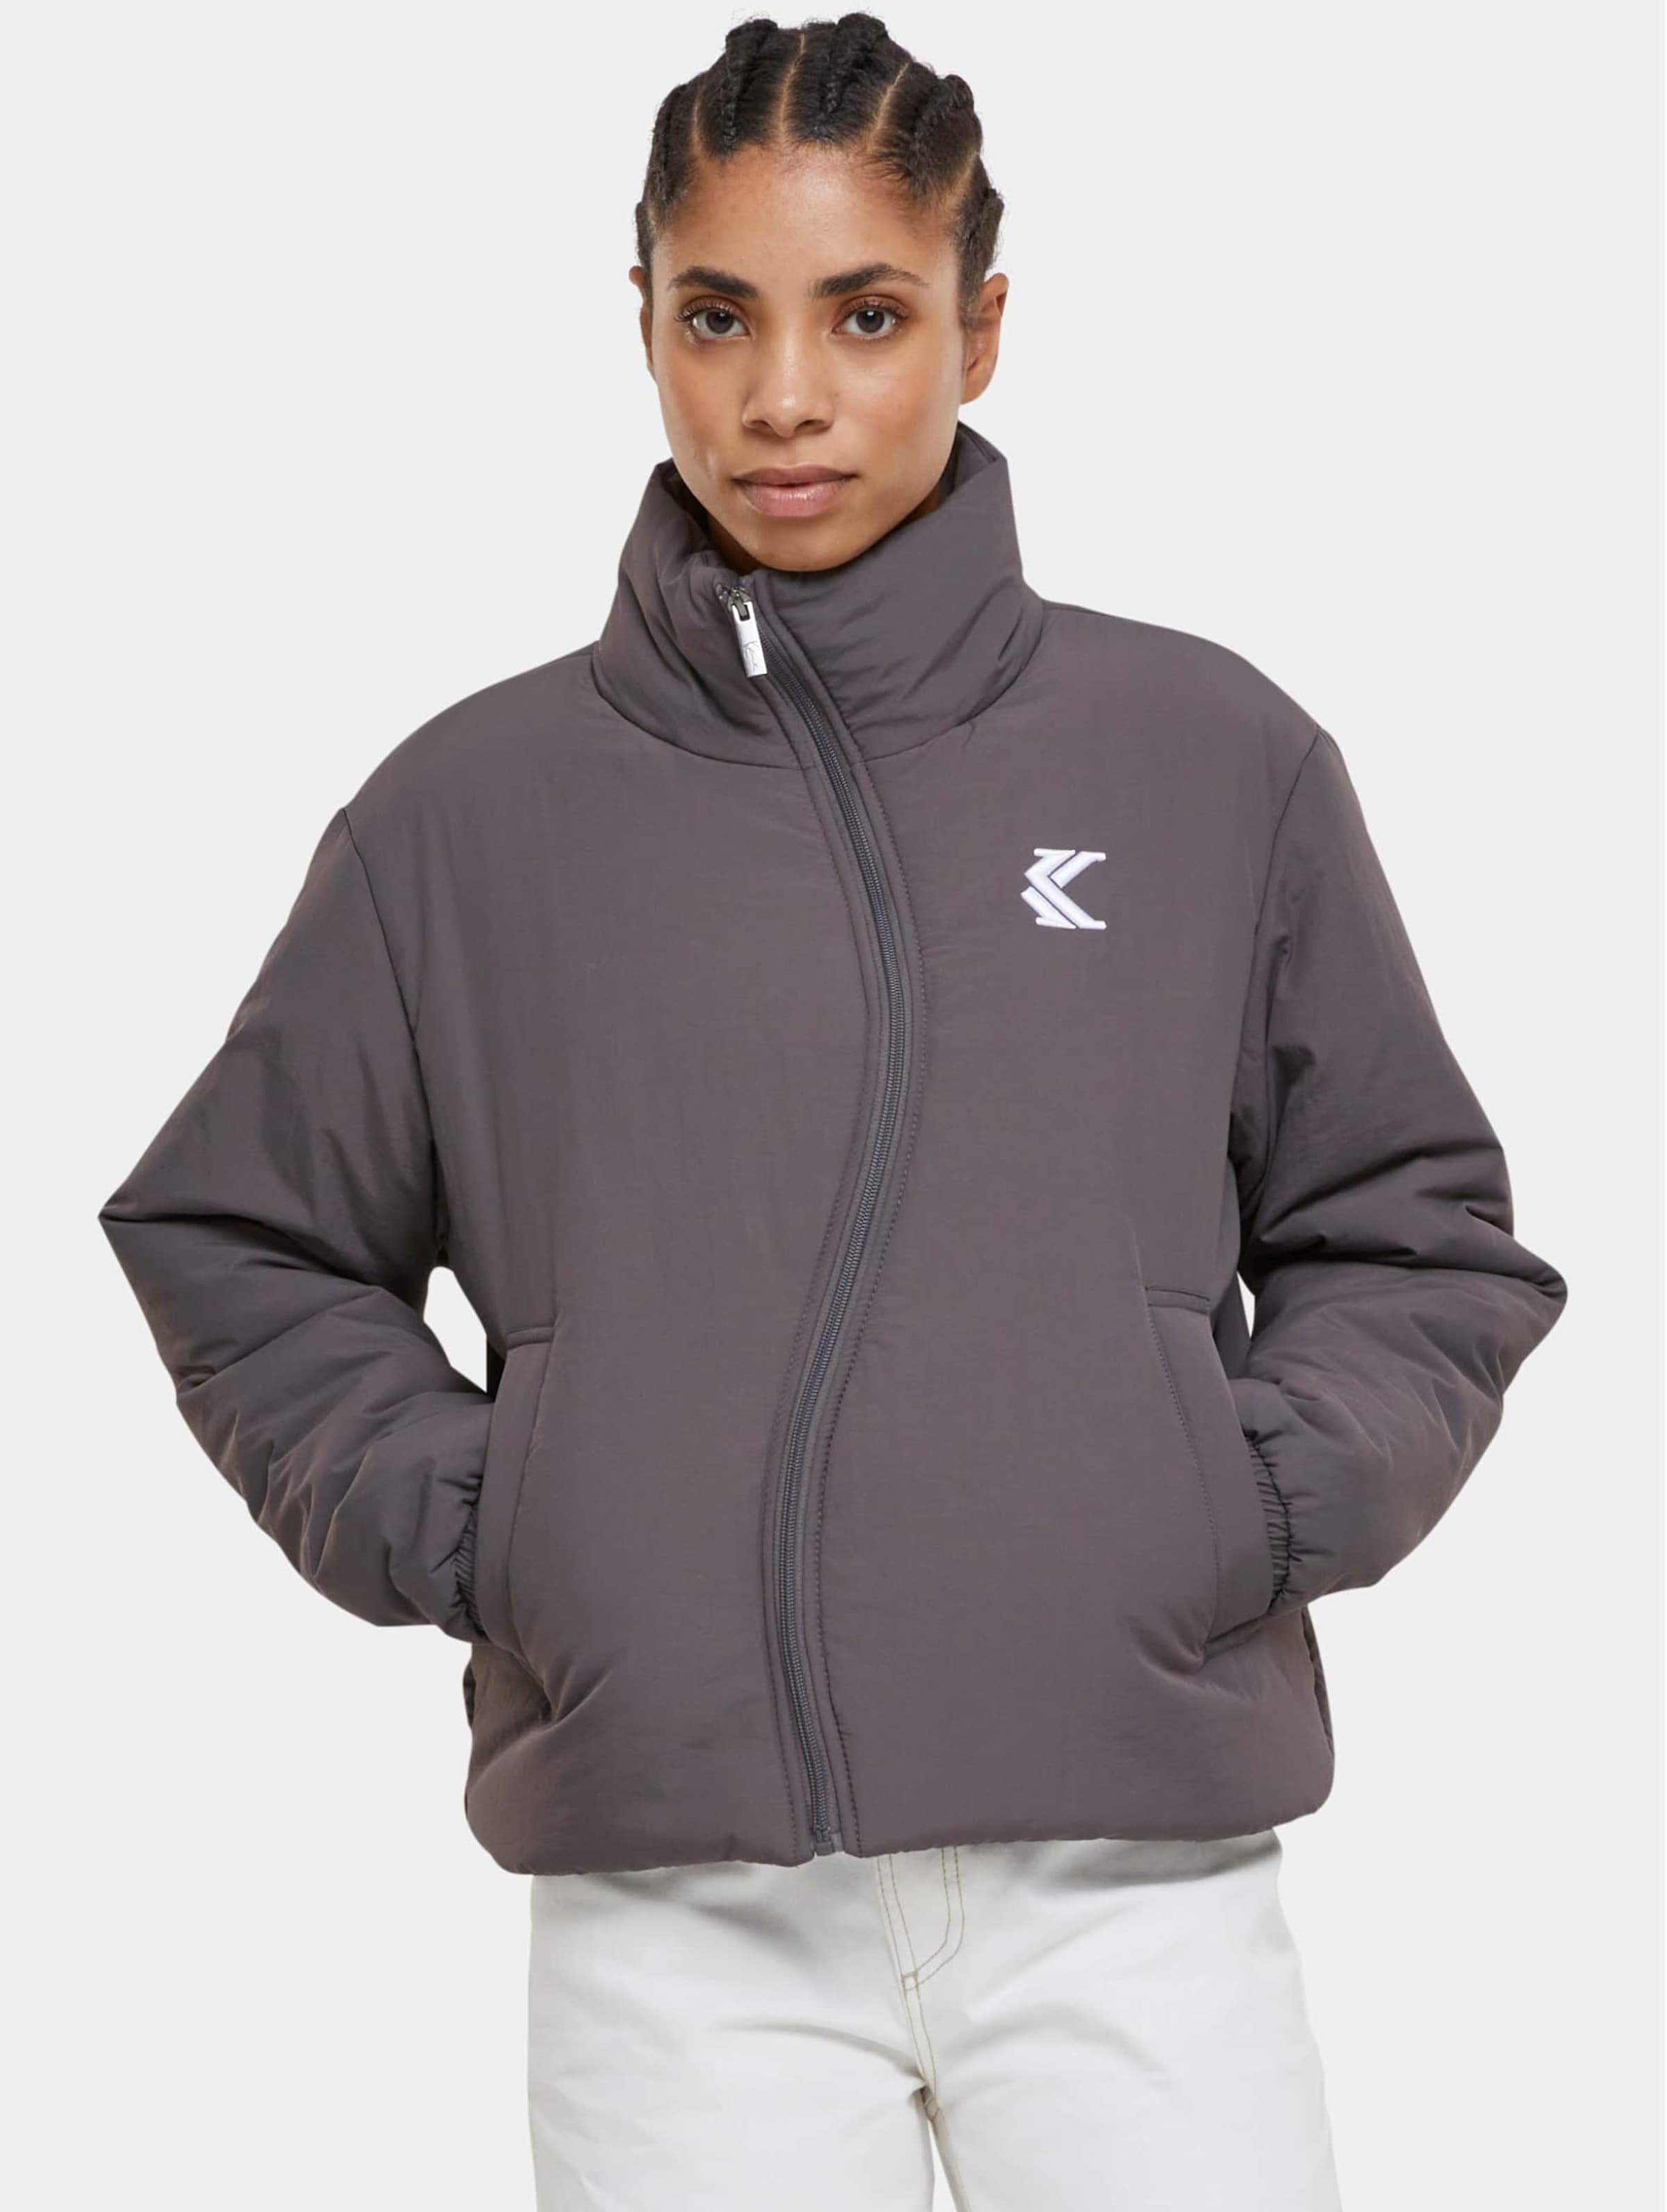 Karl Kani KW233-051-2 KK OG Wavy Puffer Jacket Vrouwen op kleur grijs, Maat S